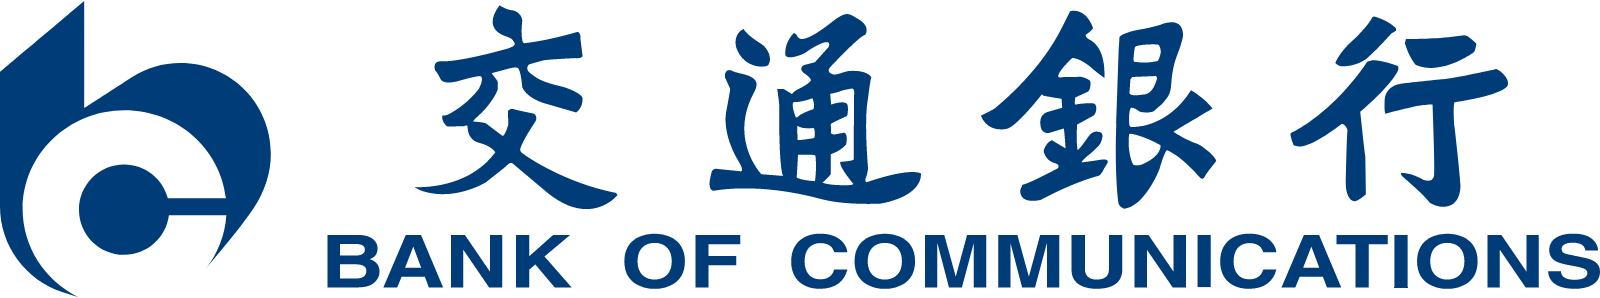 Bank of Communications logo large (transparent PNG)